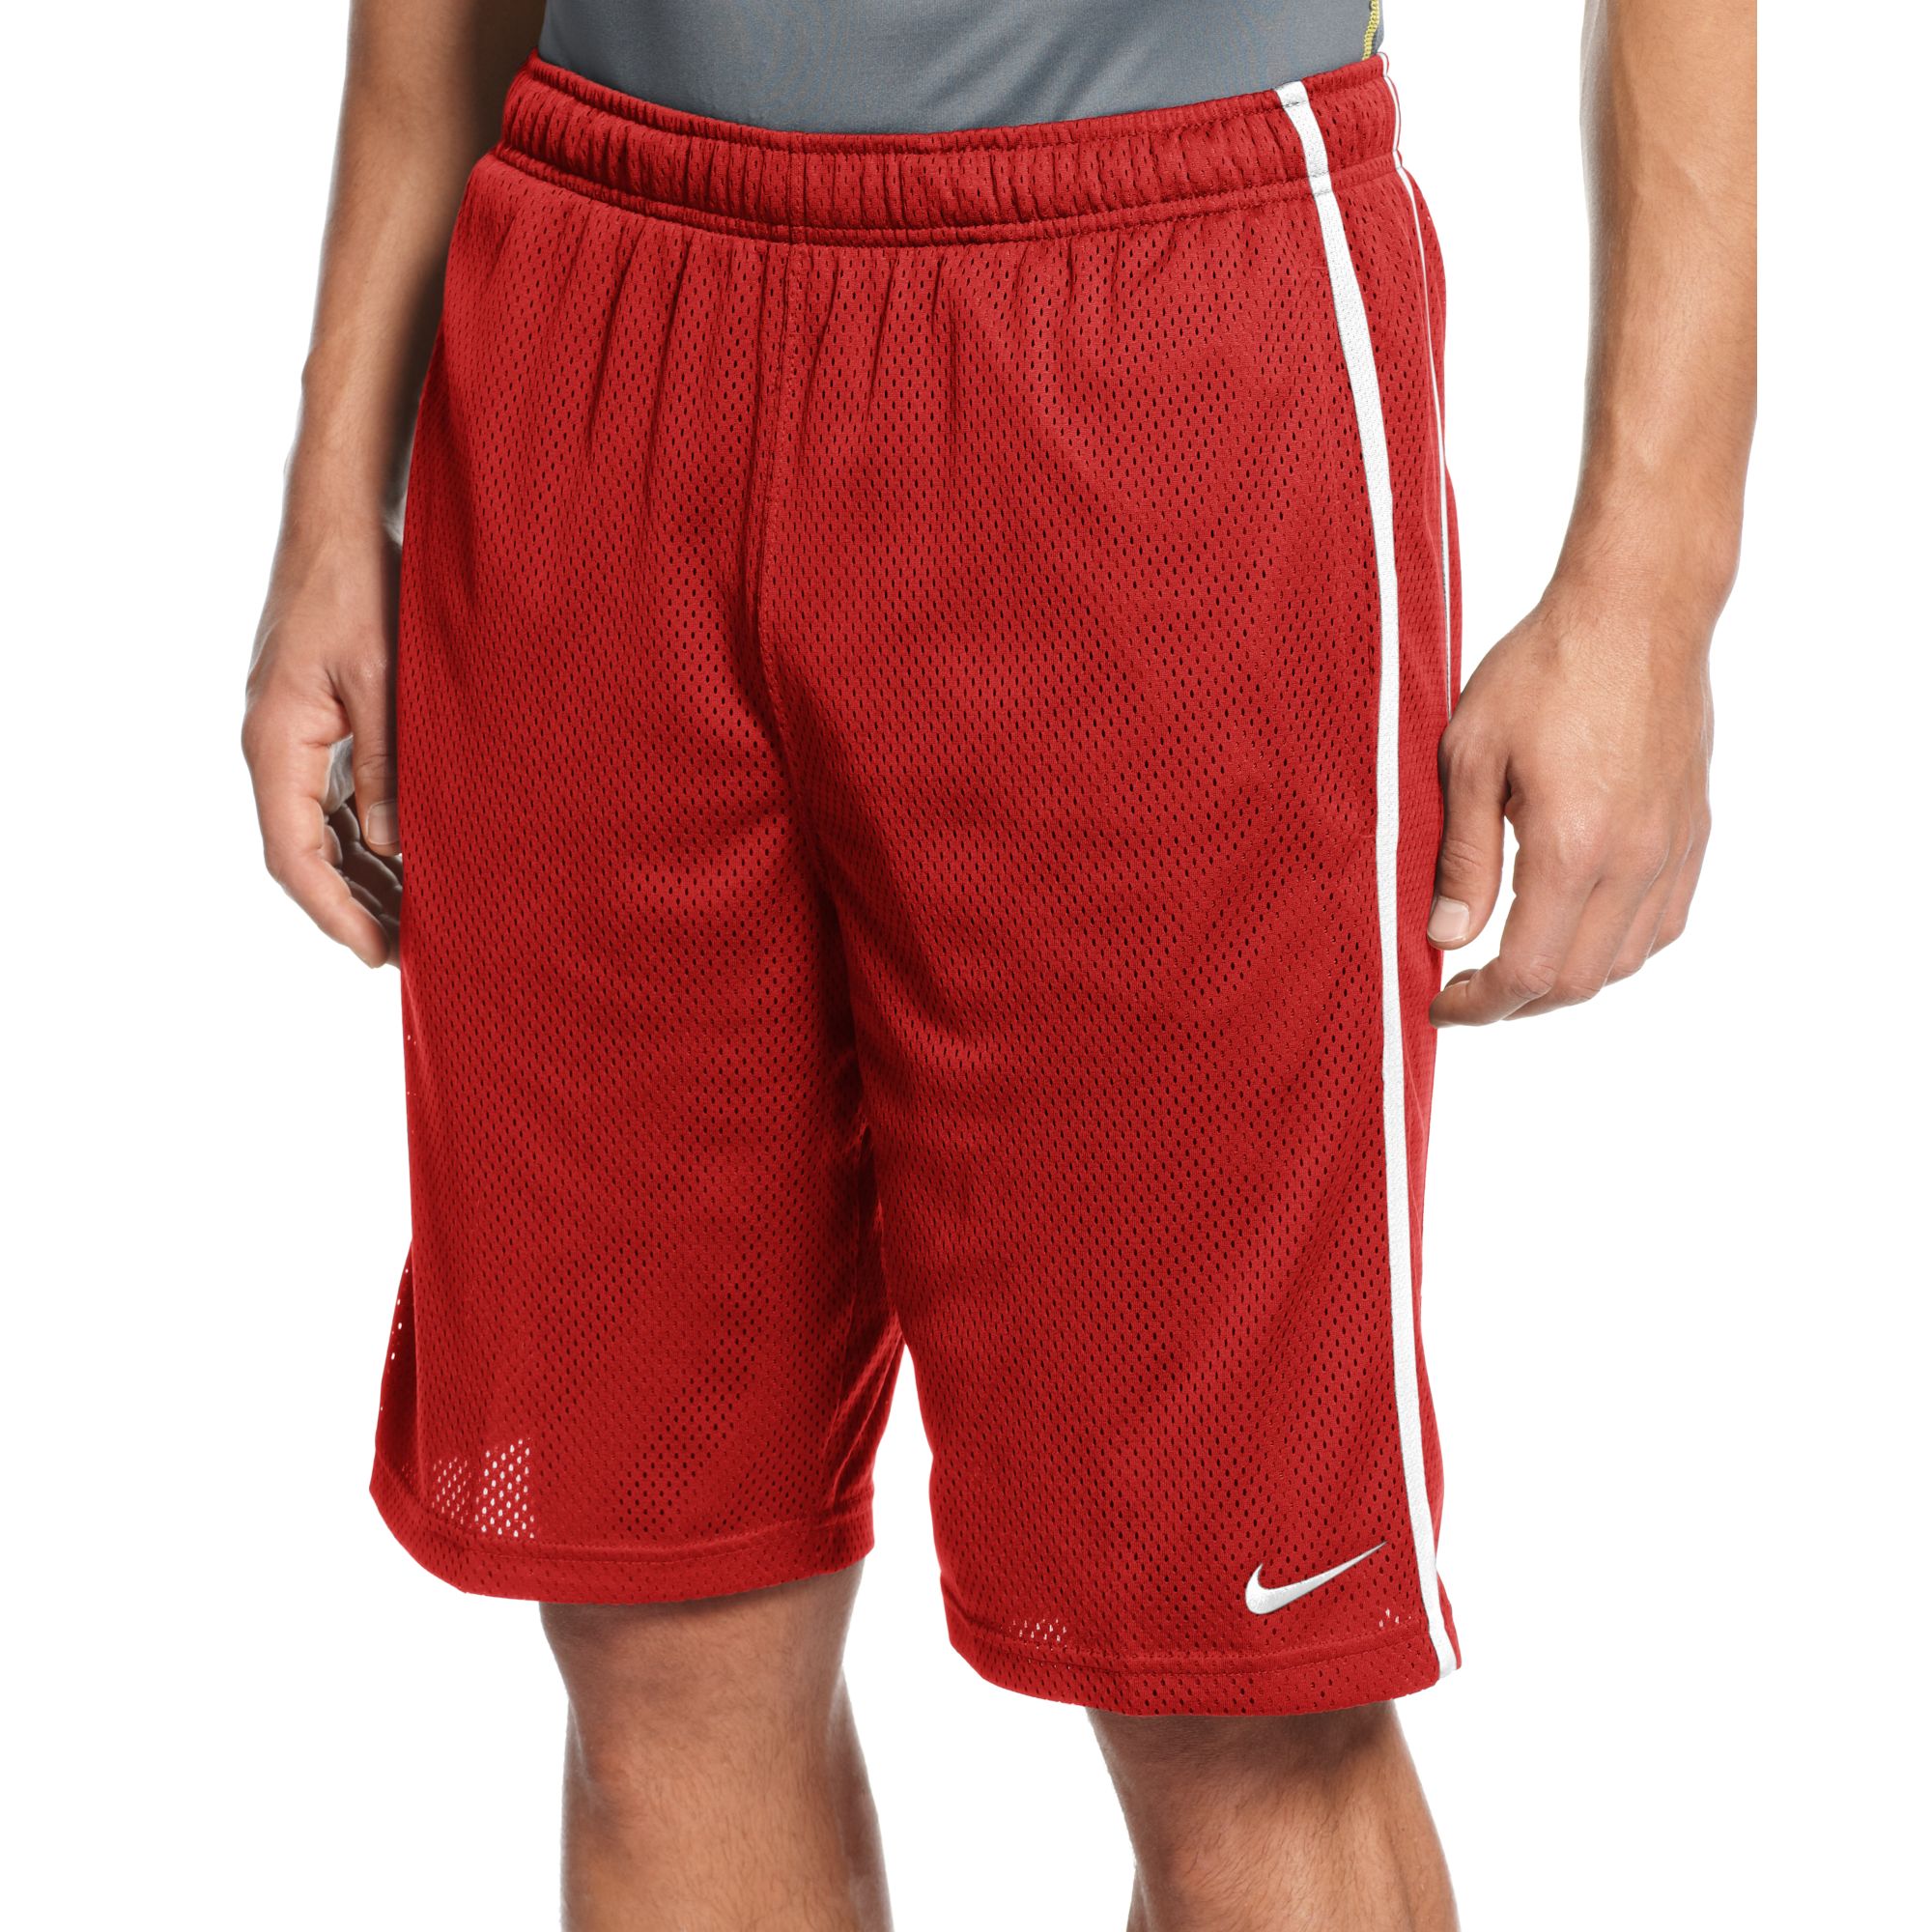 nike red basketball shorts